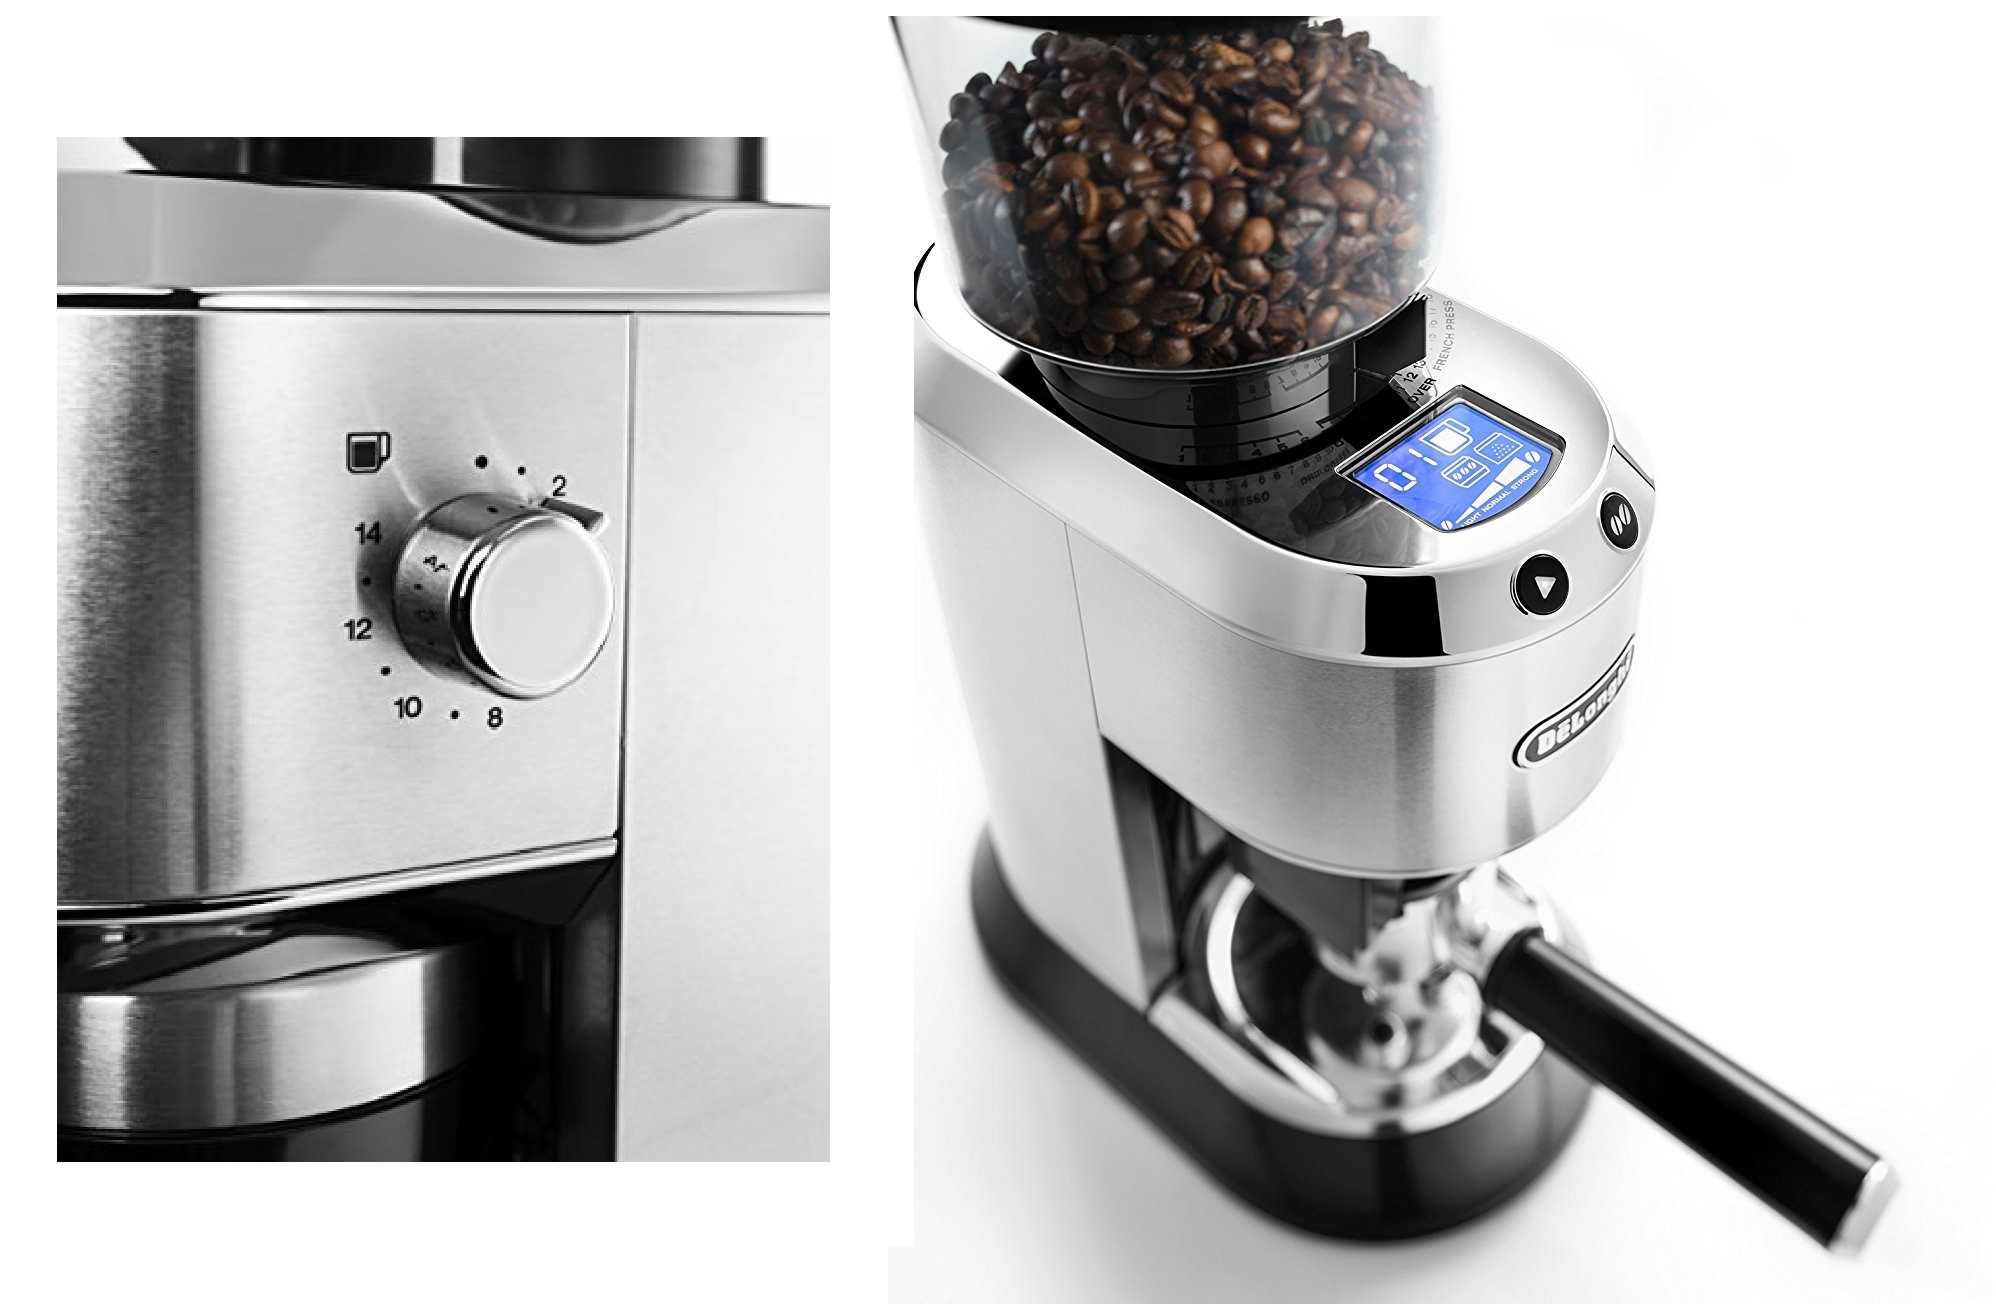 آسیاب قهوه دیجیتالی دلونگی مدل Dedica KG521 M تنظیمات